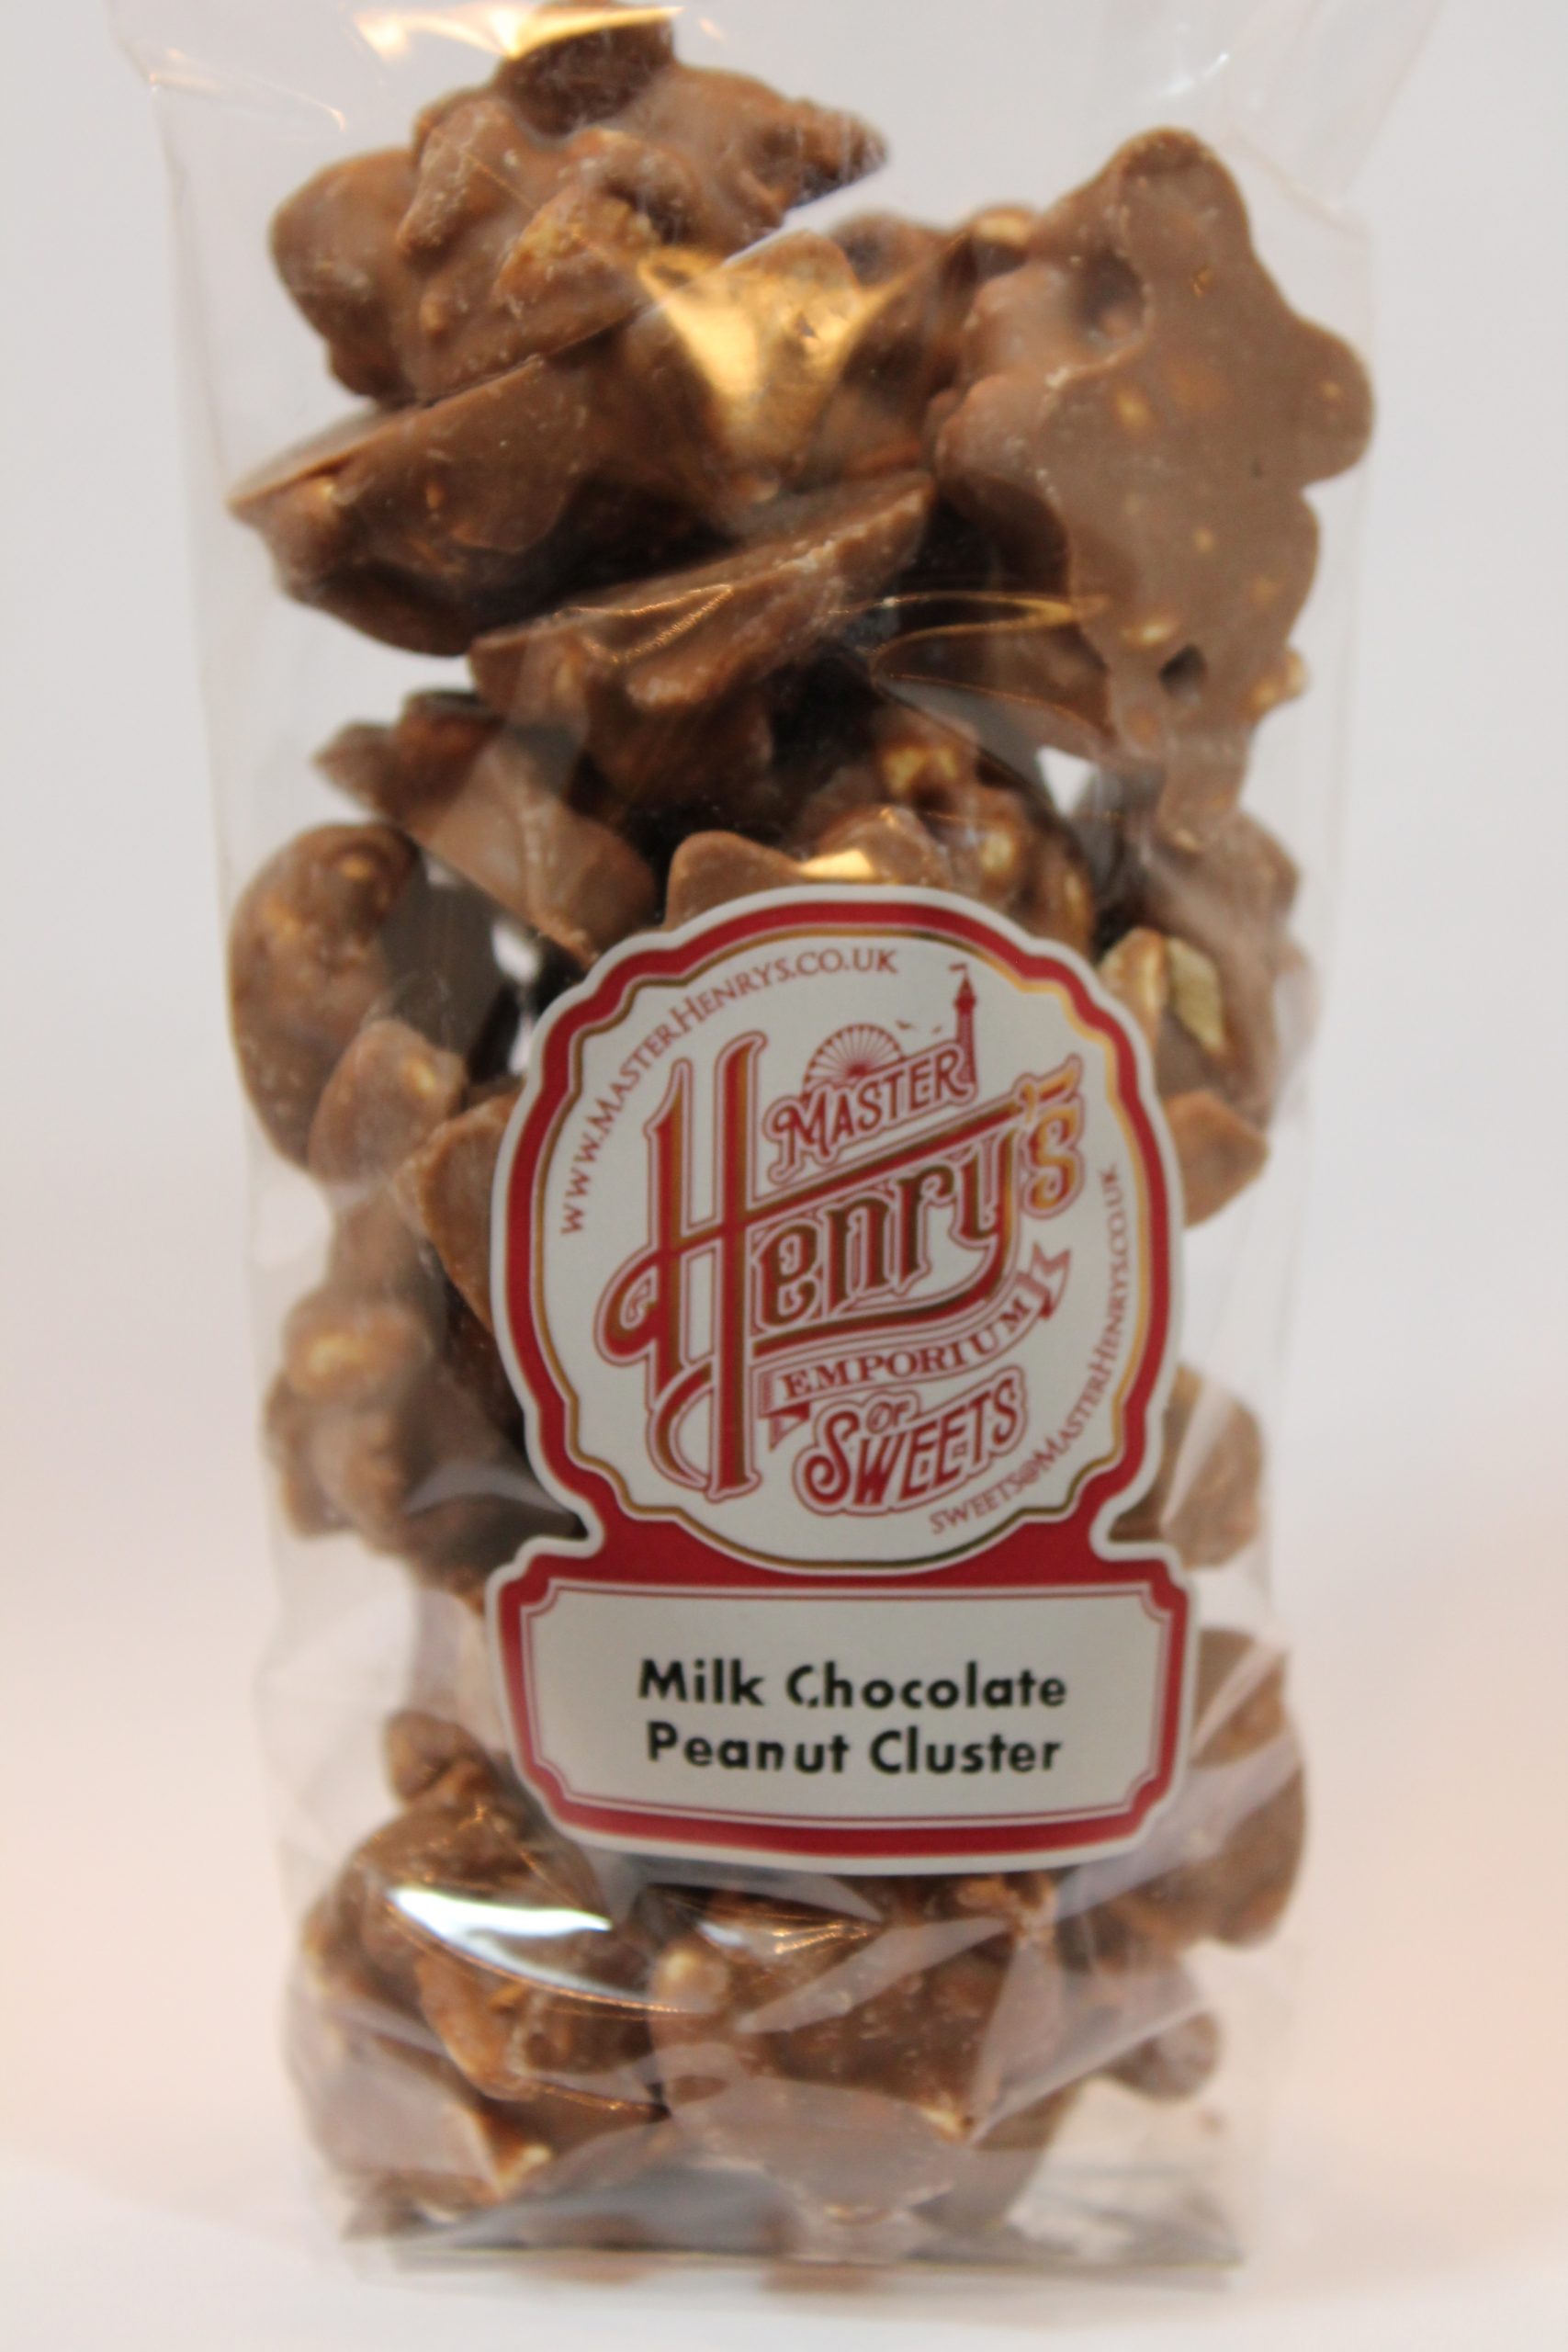 Milk Chocolate Peanut Cluster • Master Henry's Emporium of Sweets